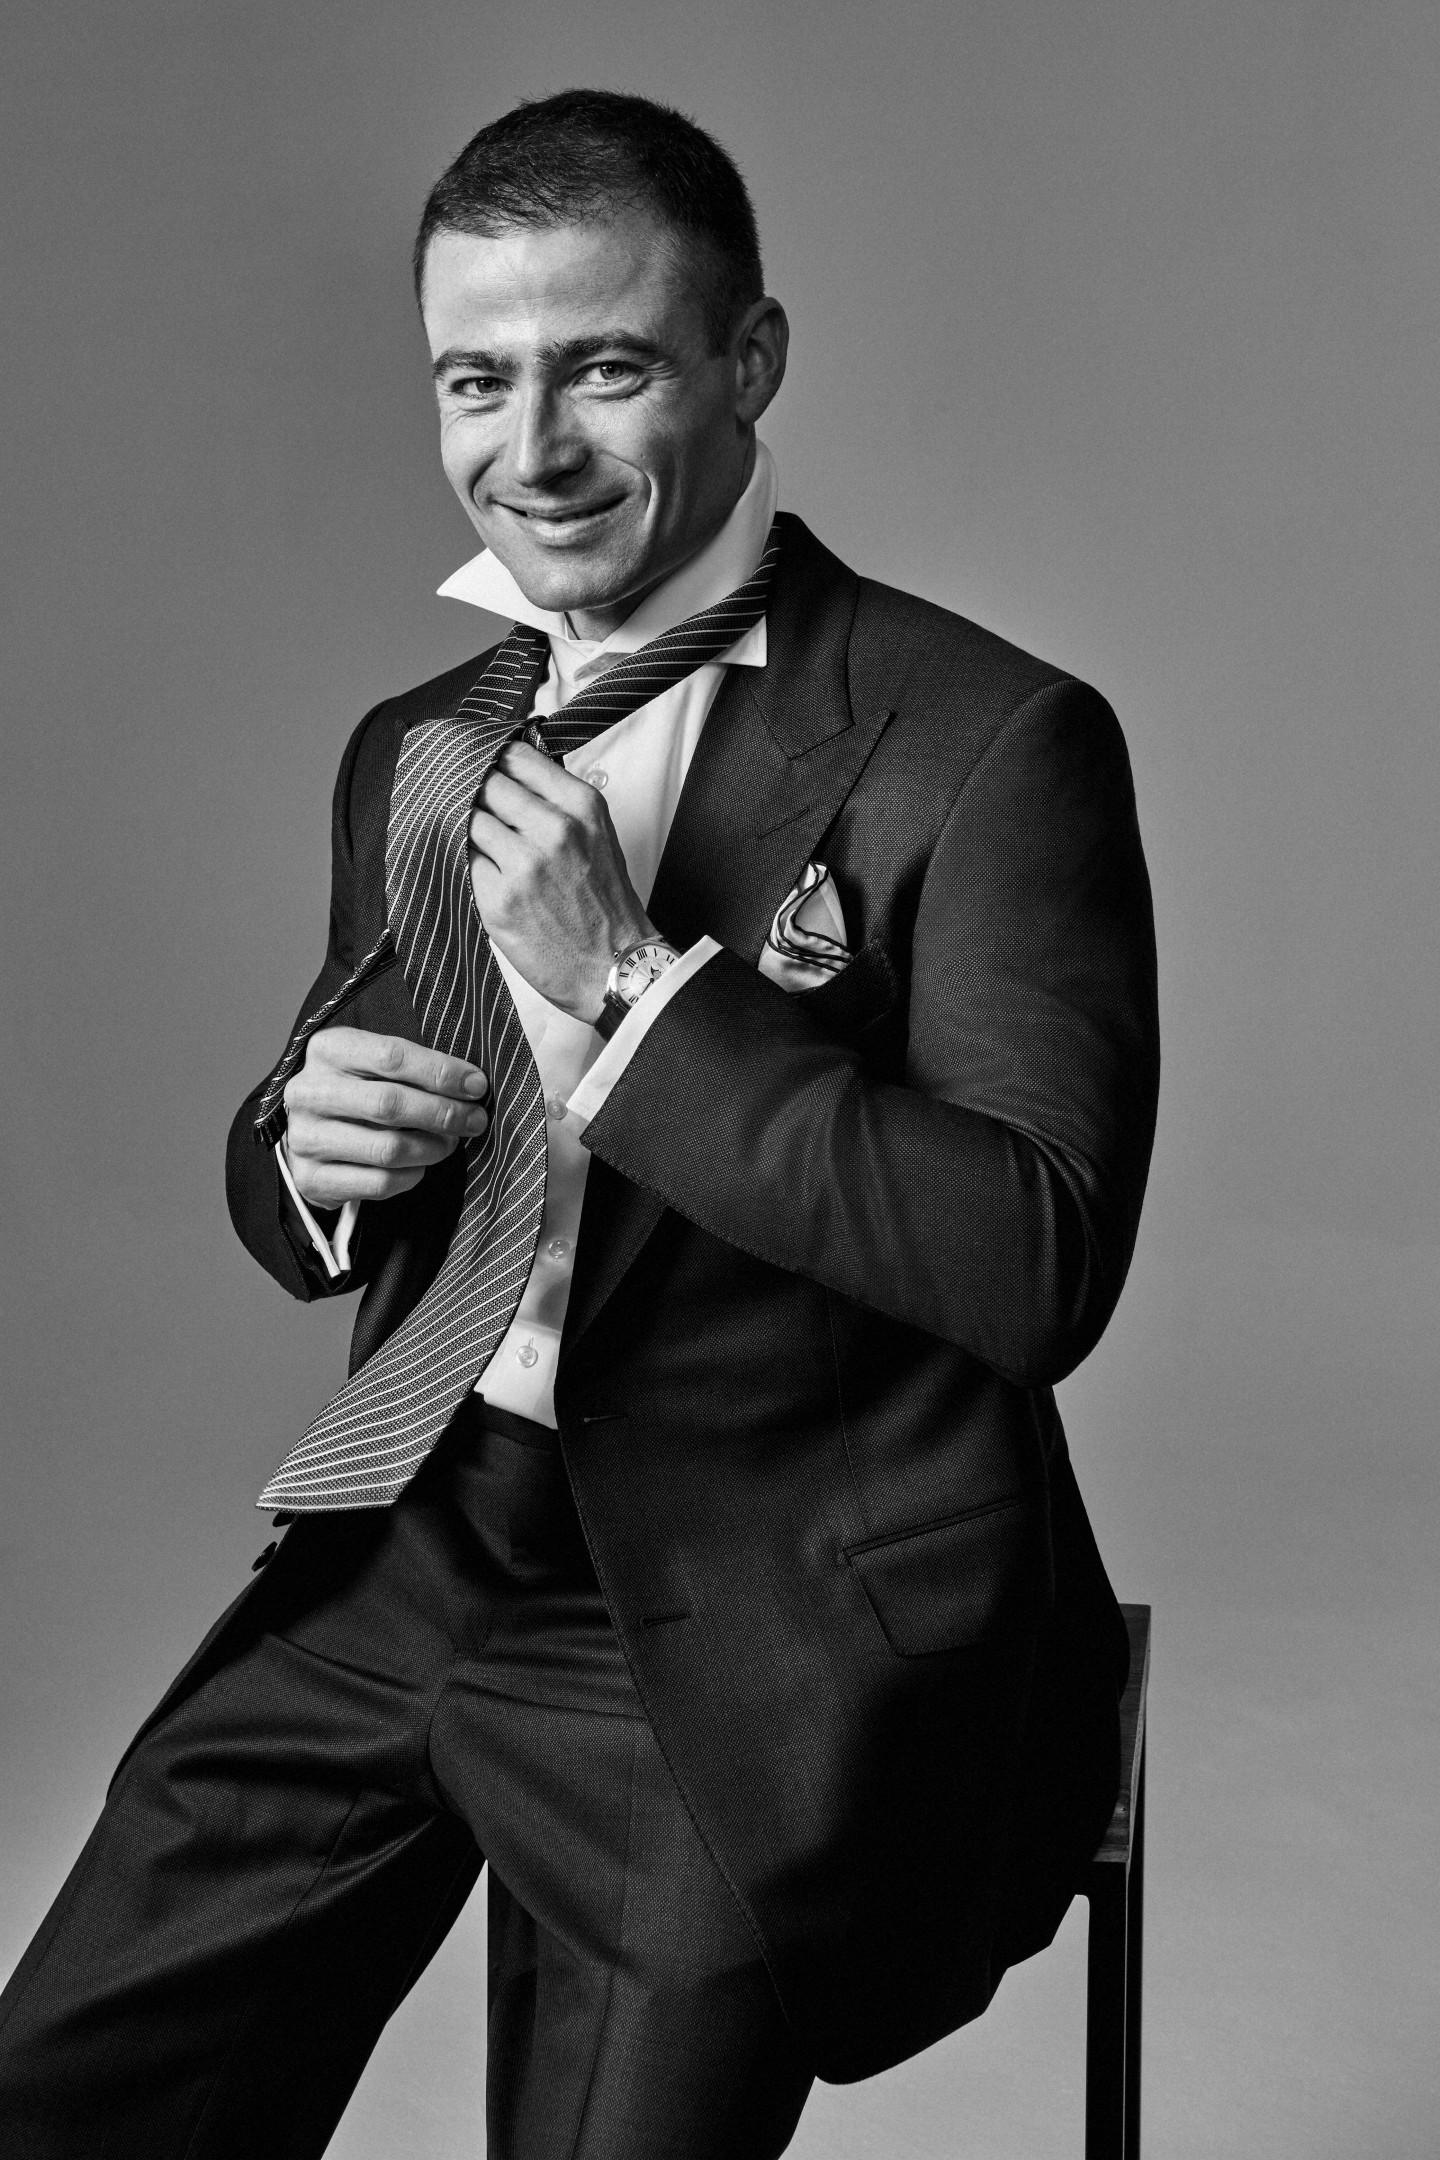 На Борисе: костюм, сорочка, галстук, платок - все Tom Ford, запонки Cartier, часы Drive de Cartier
